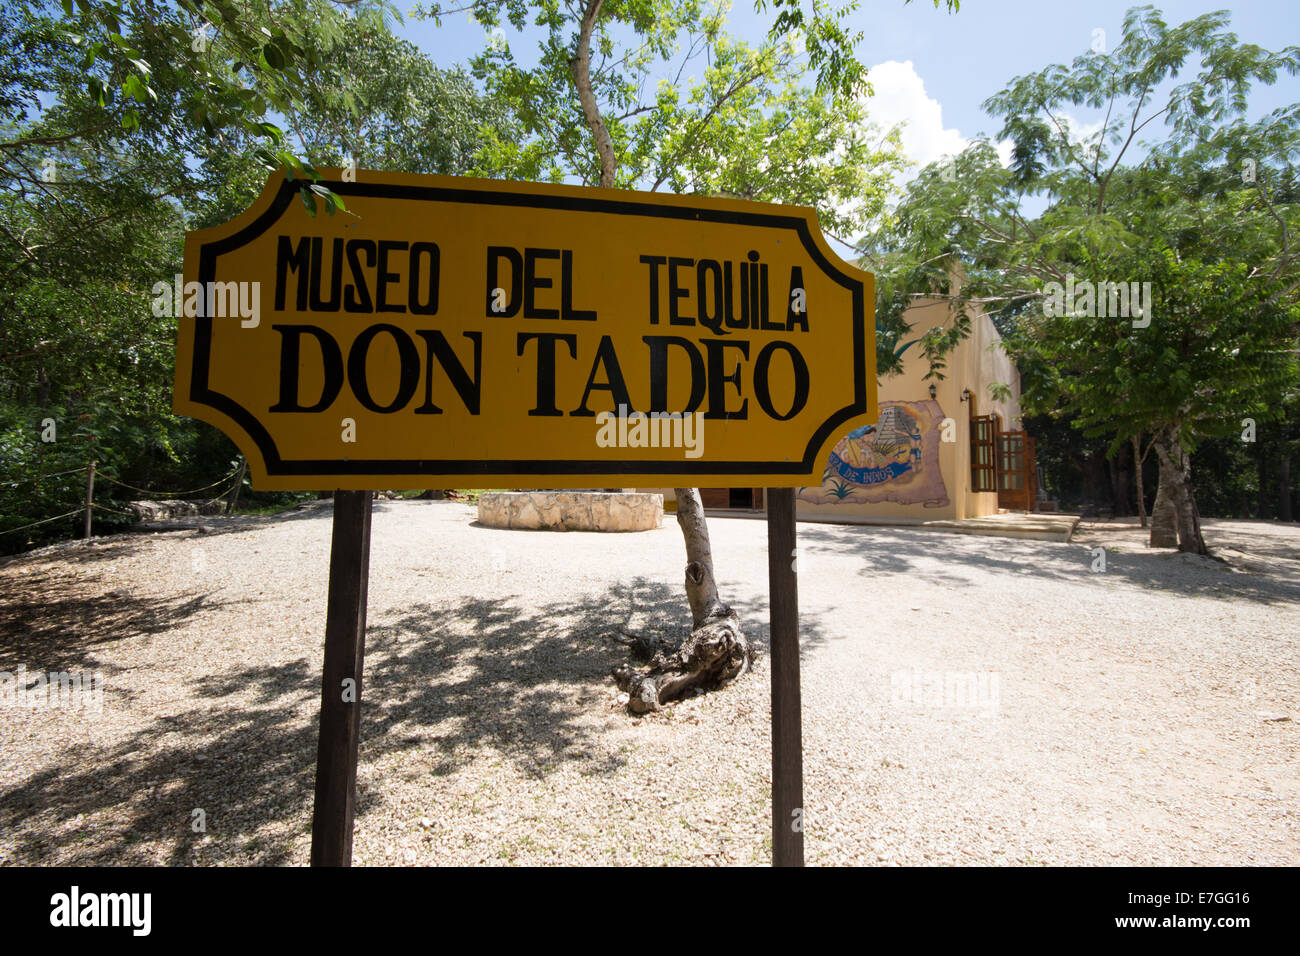 Tequila museum Don Tadeo at the Cenote Hubiku, Mexico Stock Photo